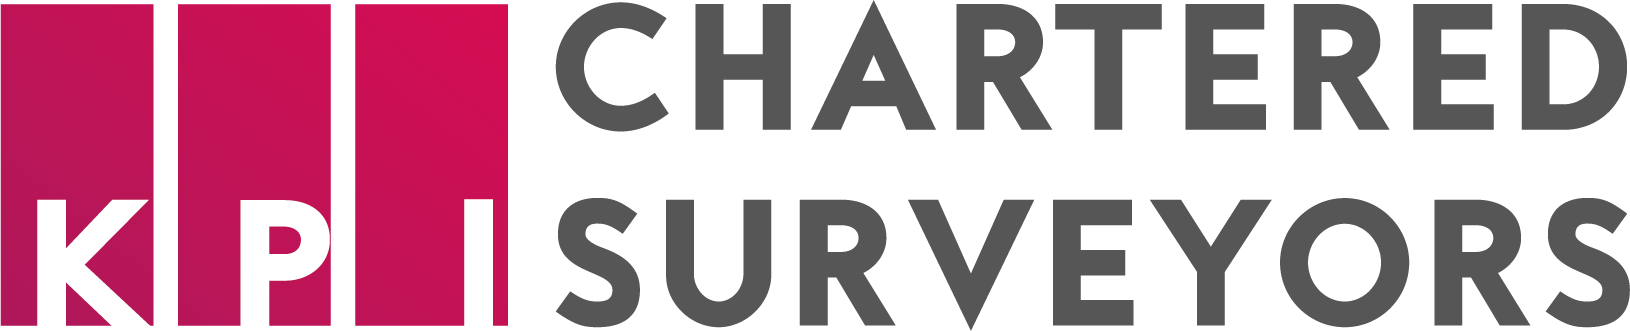 KPI Chartered Surveyors